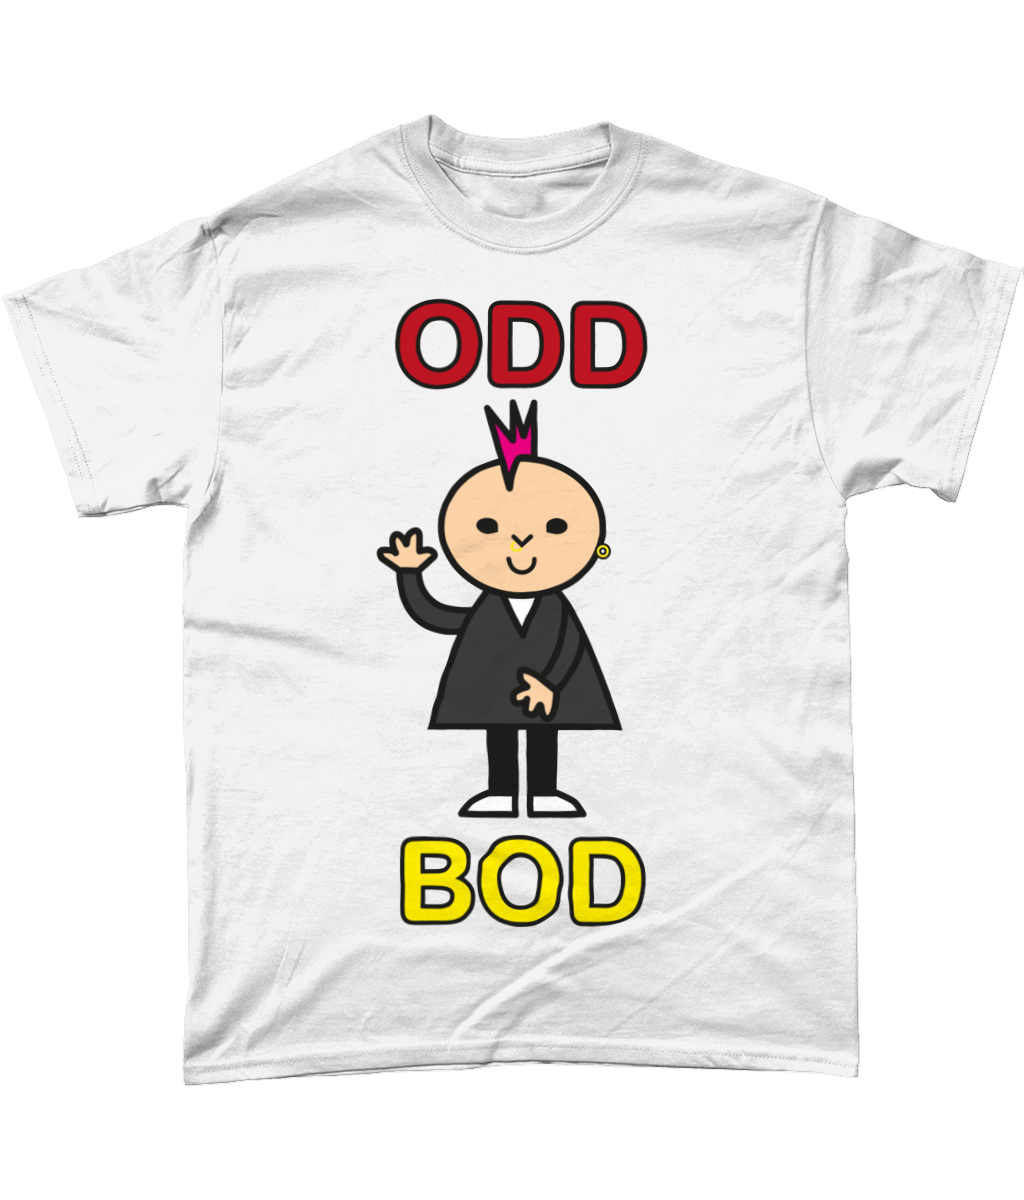 Odd Bod - T-Shirt - Apparel of Laughs